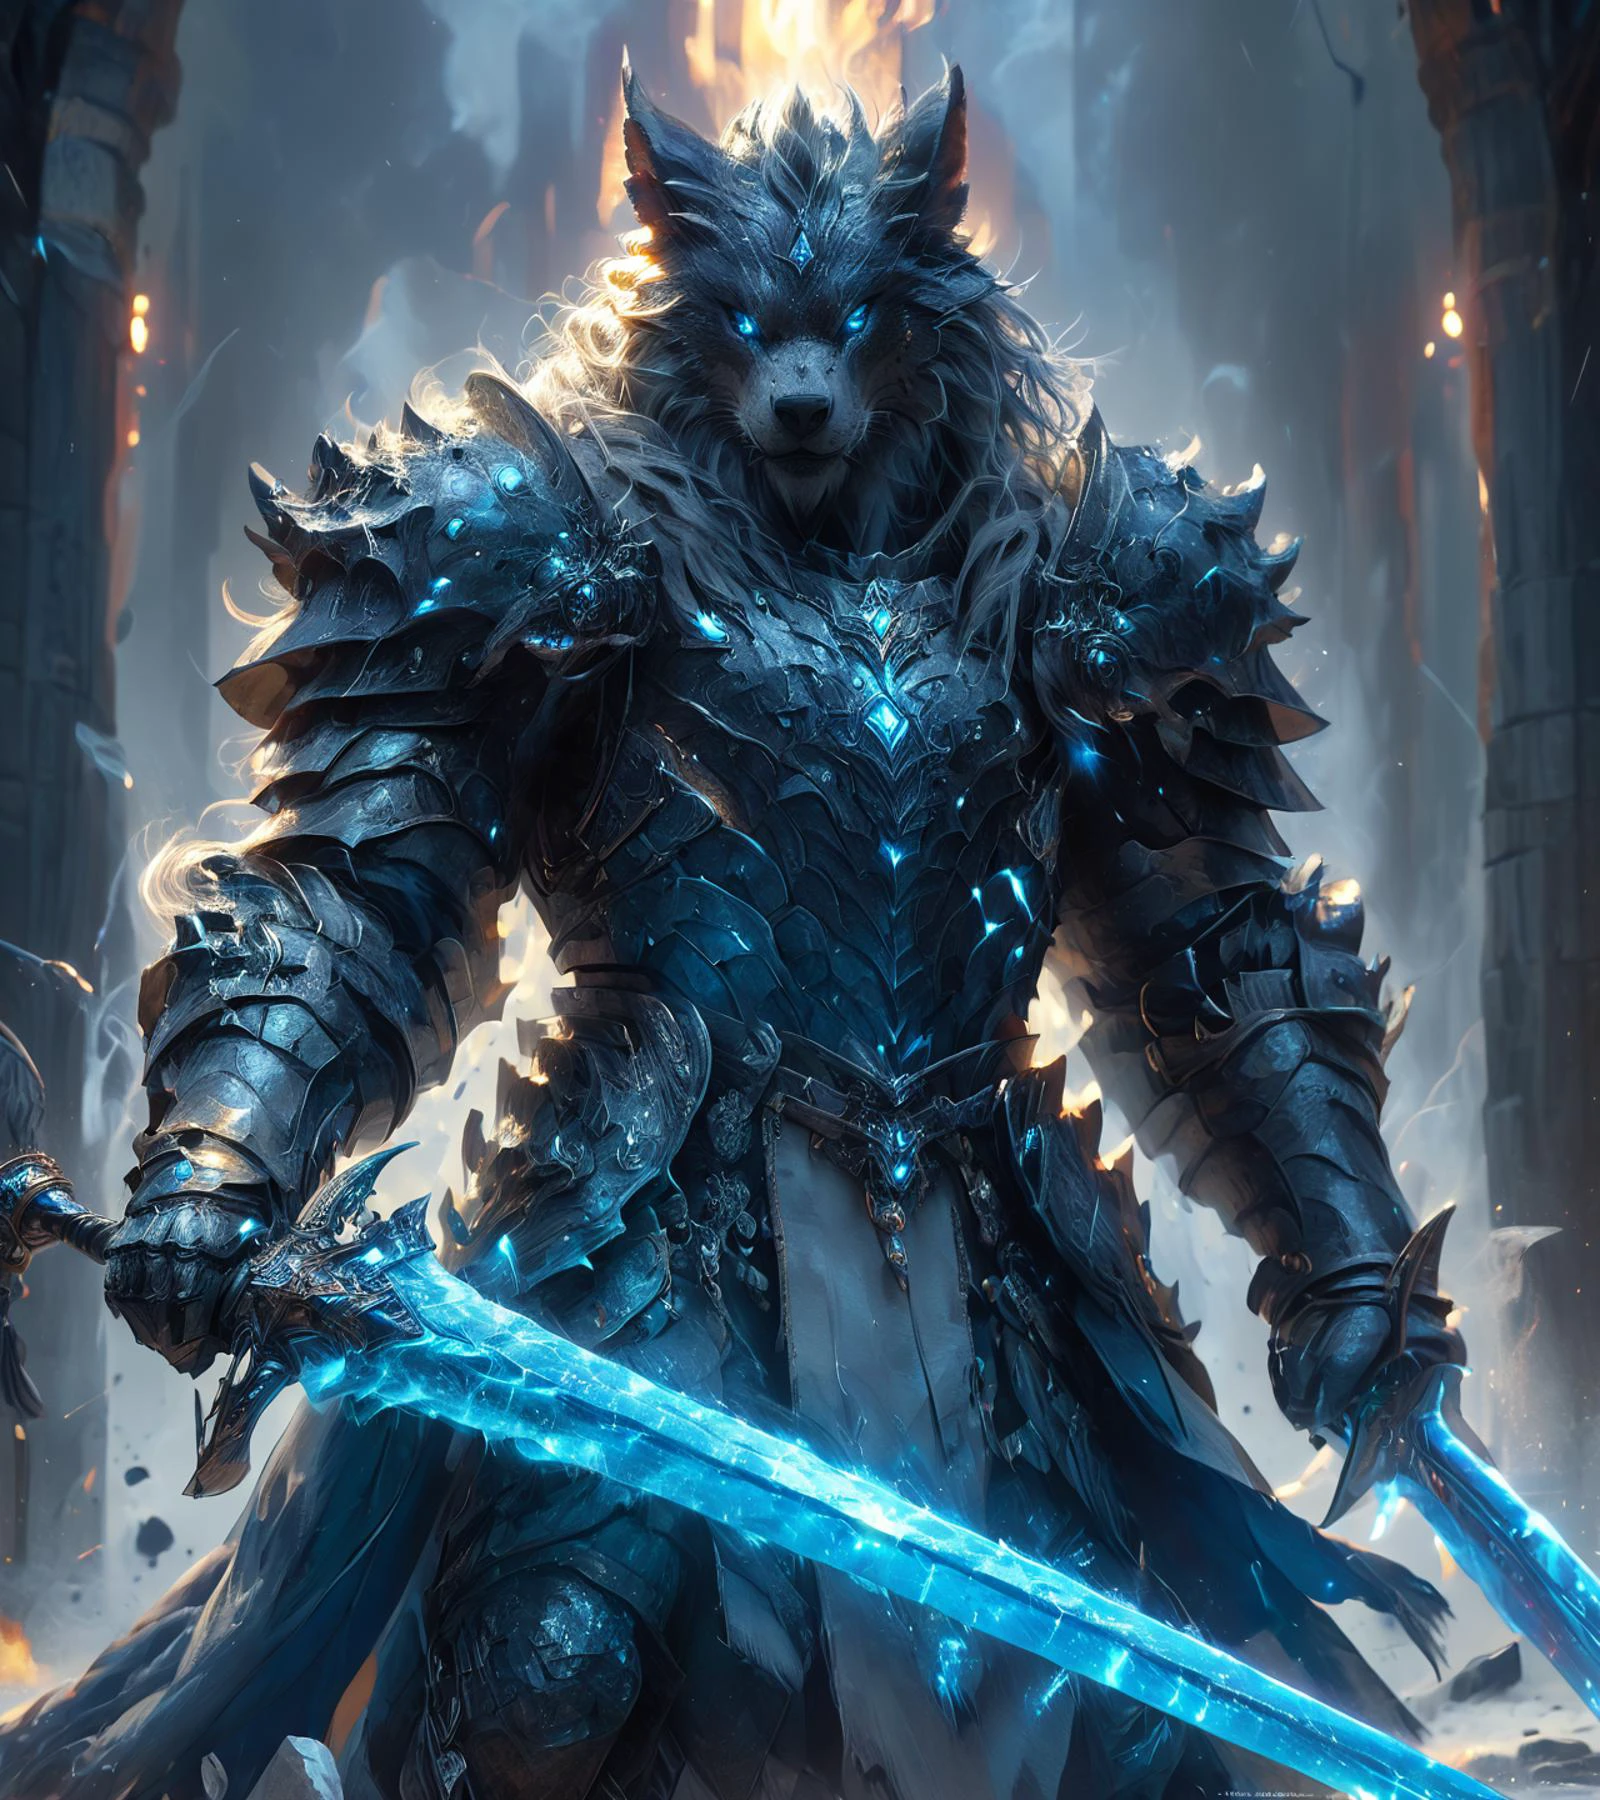 amazing fantasy cybernetic 兽 wolf warrior,黑色和蓝色,上帝,玛雅风格,细致的脸部,埃尔德里奇,兽,魔像,昆虫,巫妖,龙,元素,火,冰,风,闪电,巨大的,武士刀,黑曜石白金,双剑,